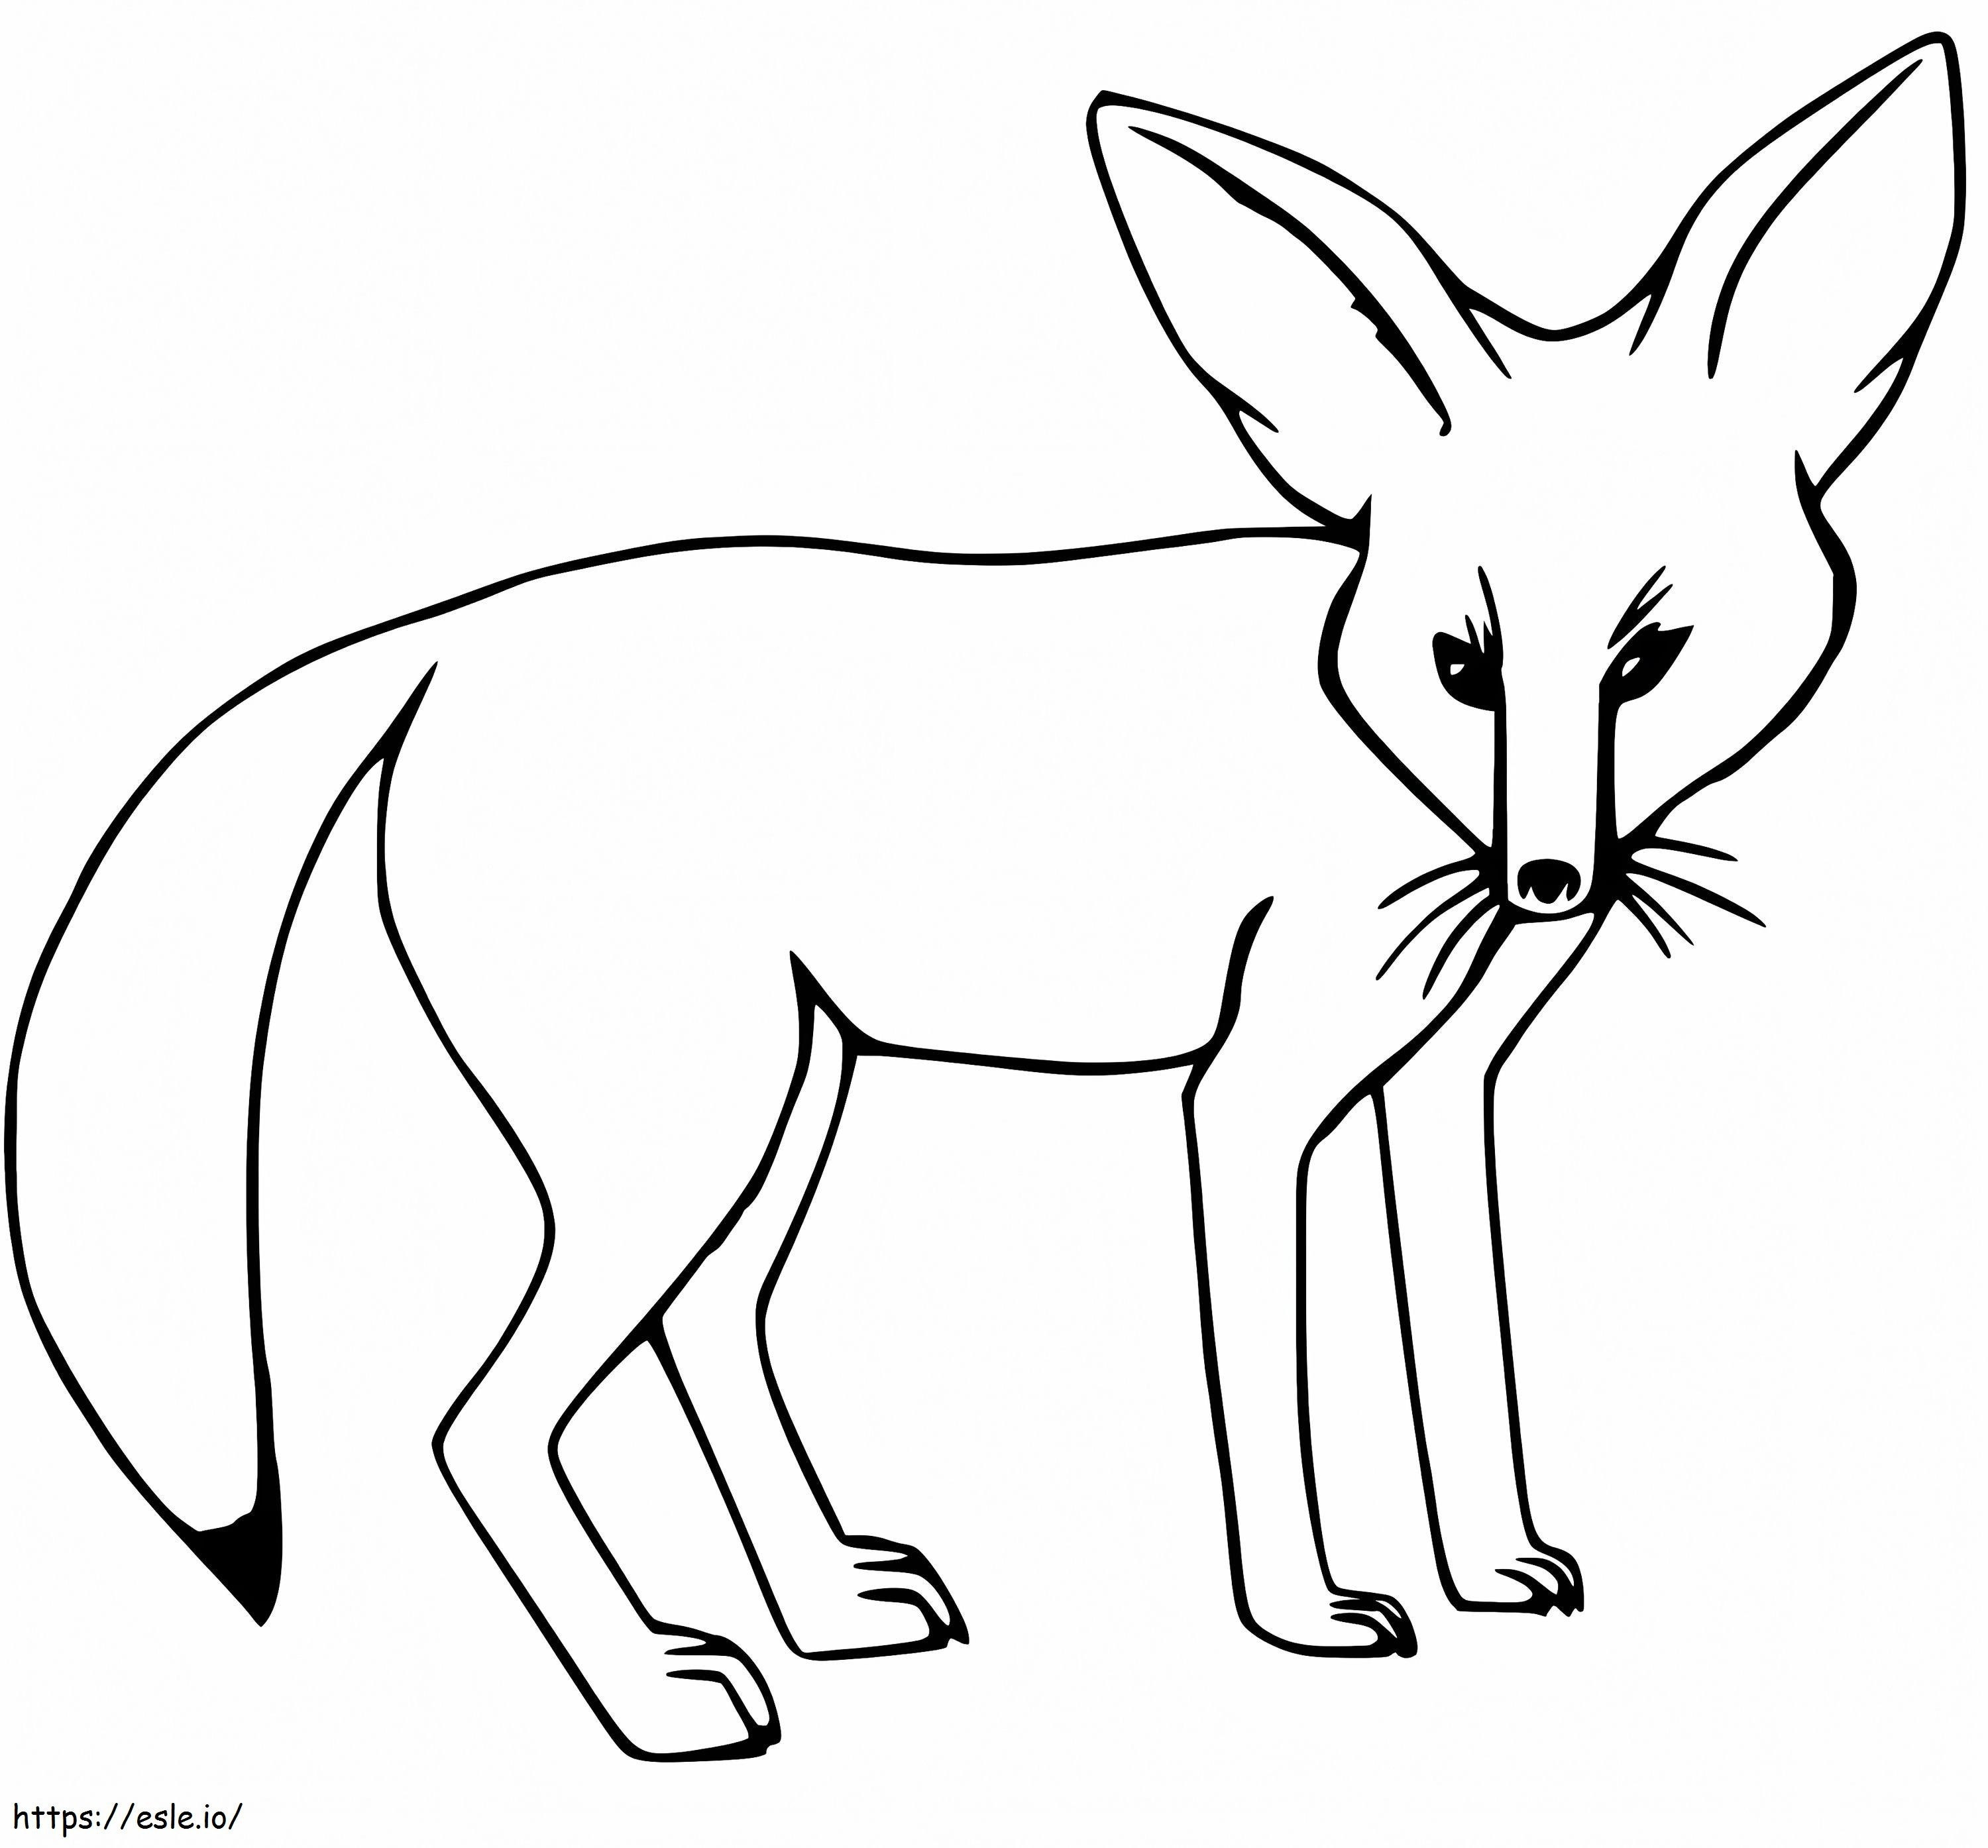 A Simple Fennec Fox coloring page